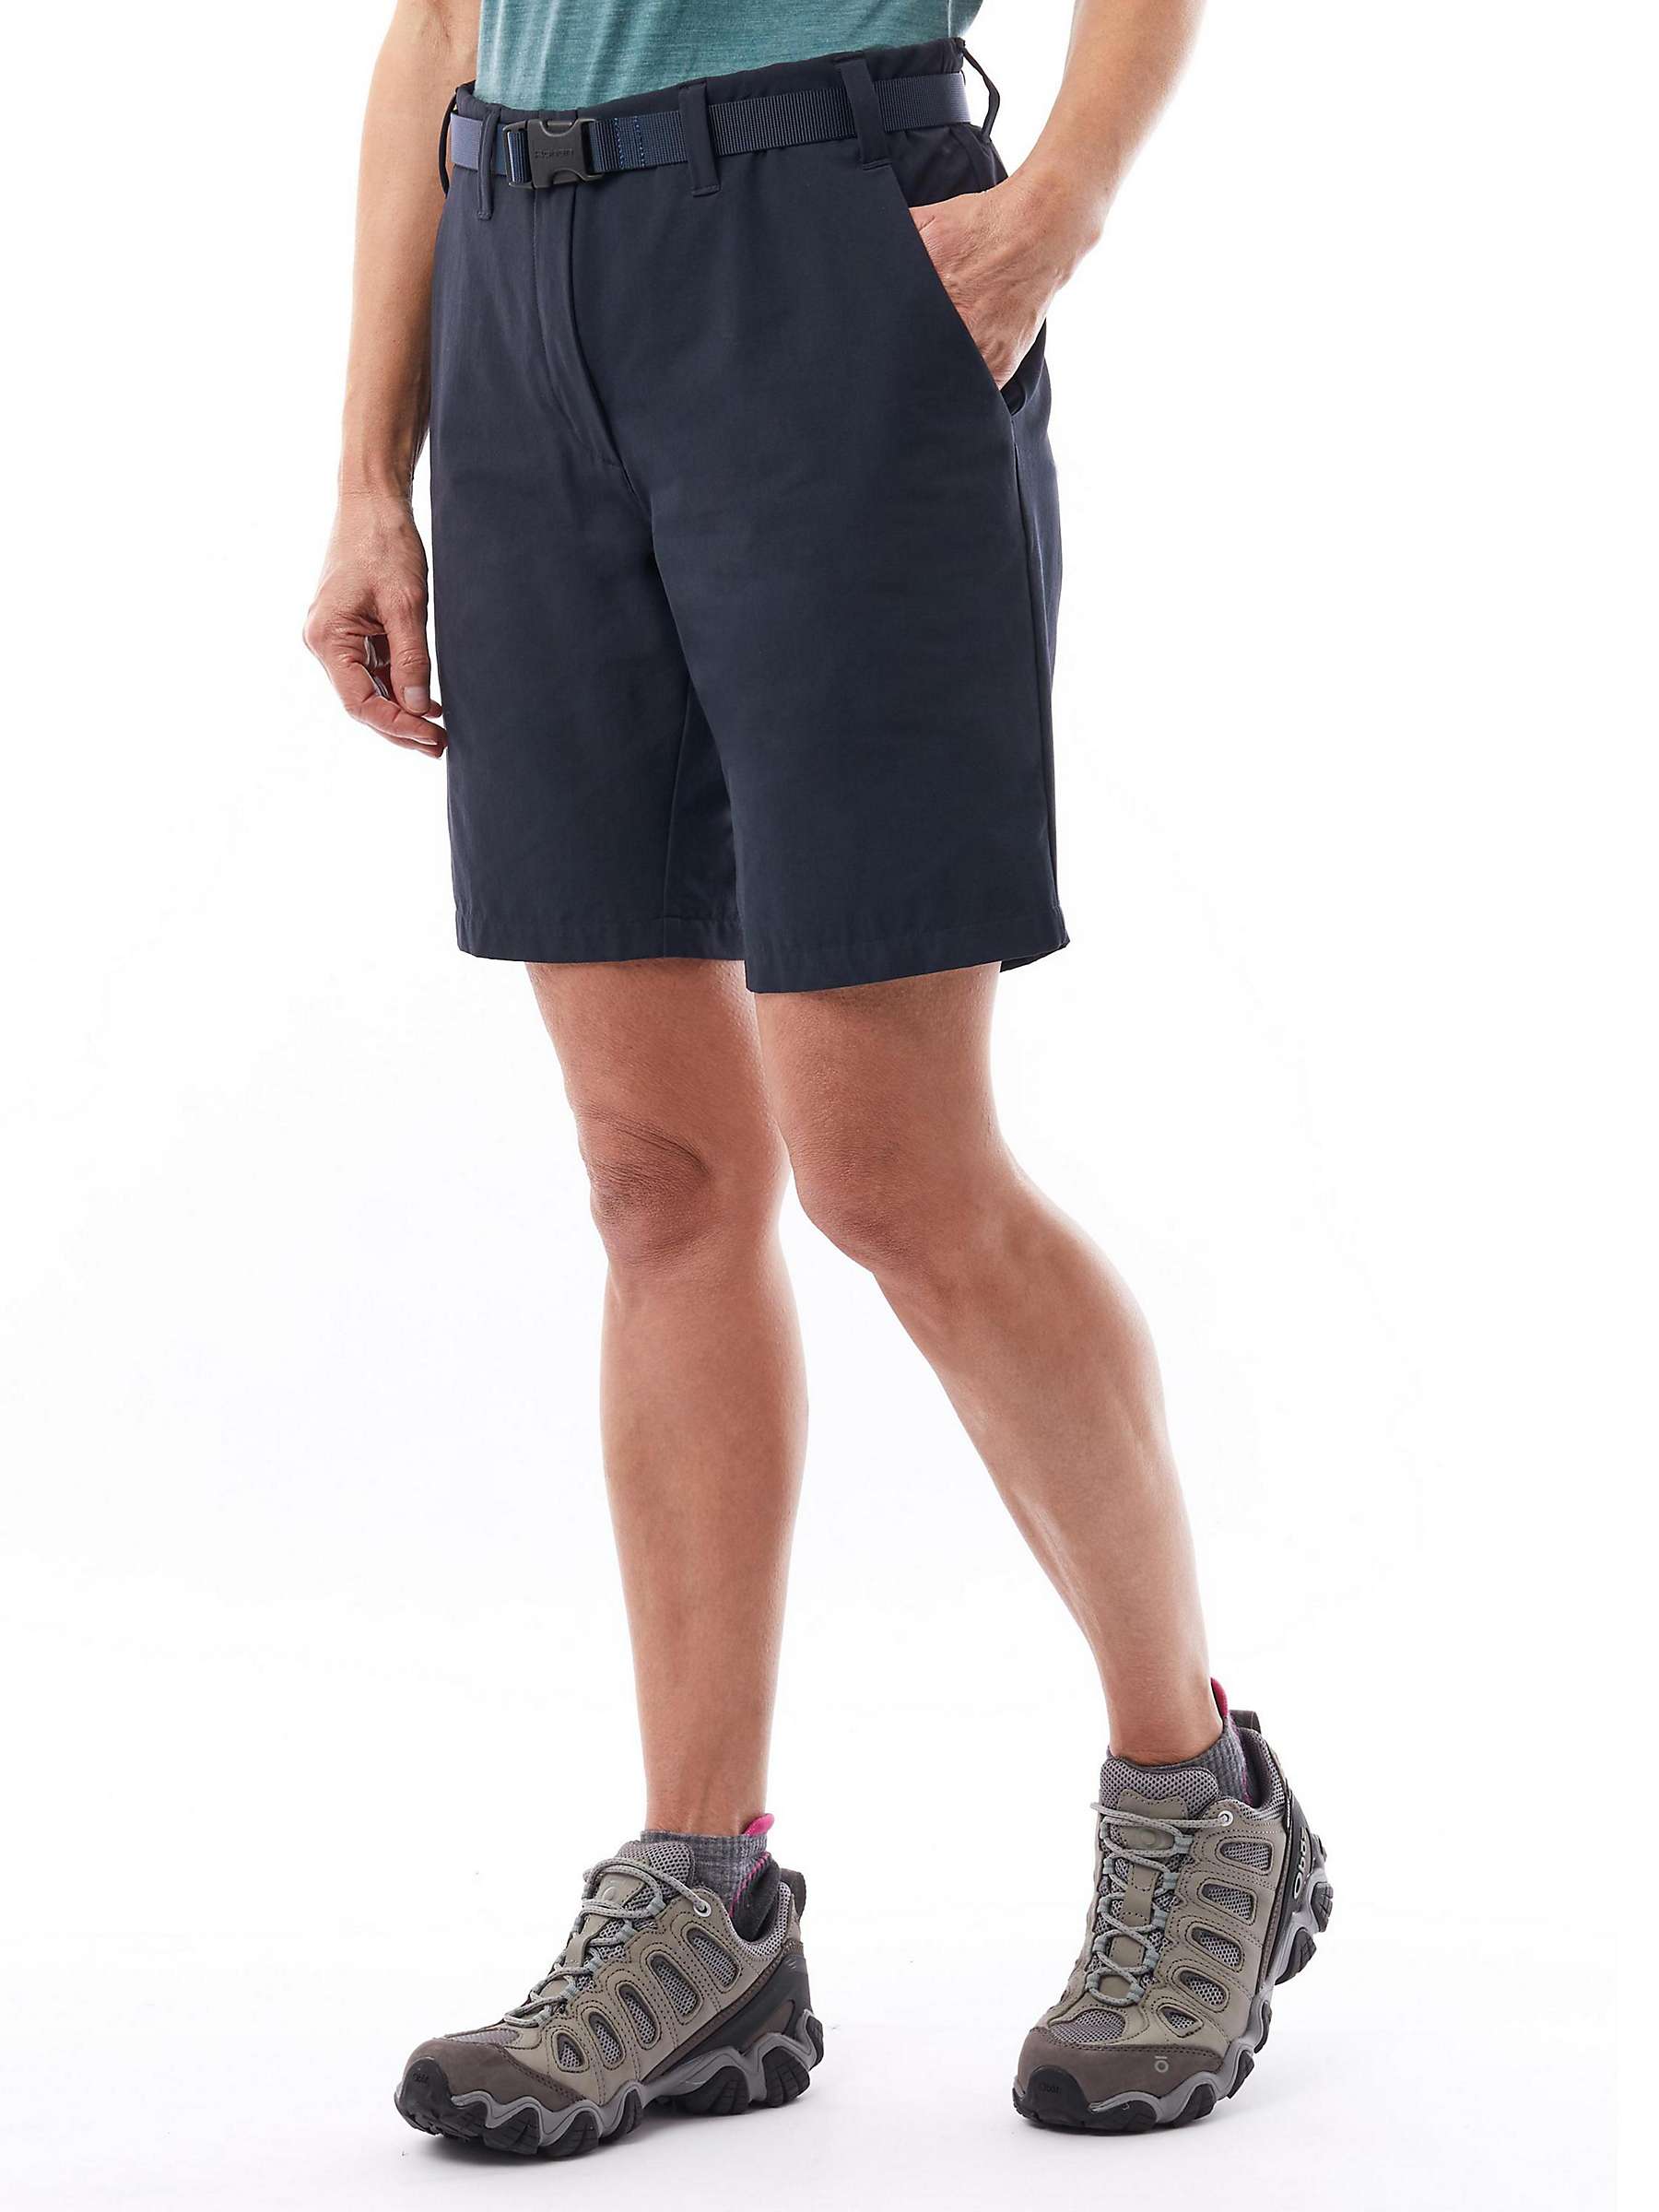 Buy Rohan Roamer Walking Shorts Online at johnlewis.com